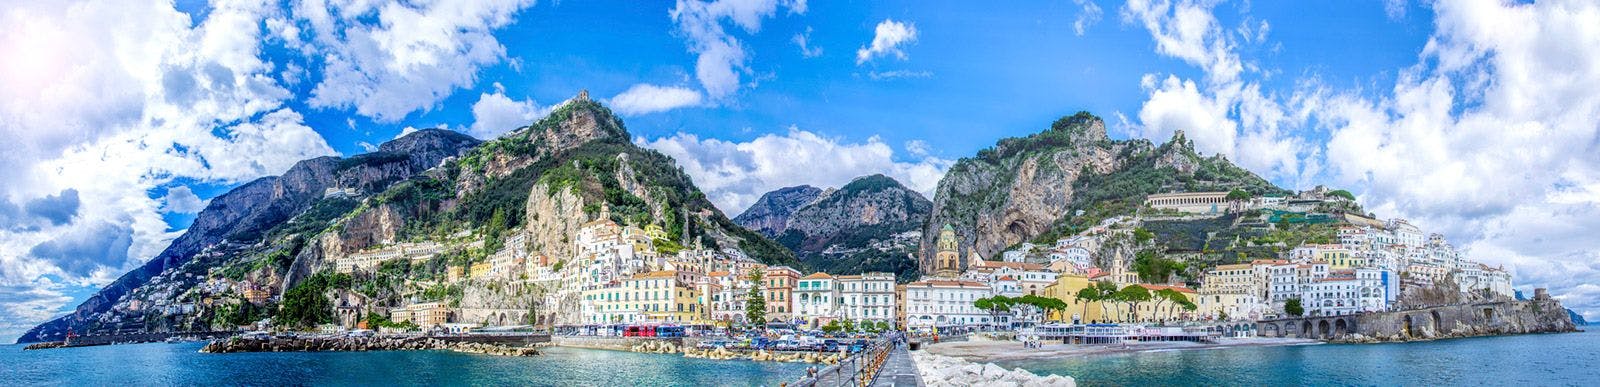 Amalfi Coast panoramic shot of town, mountains, and sea